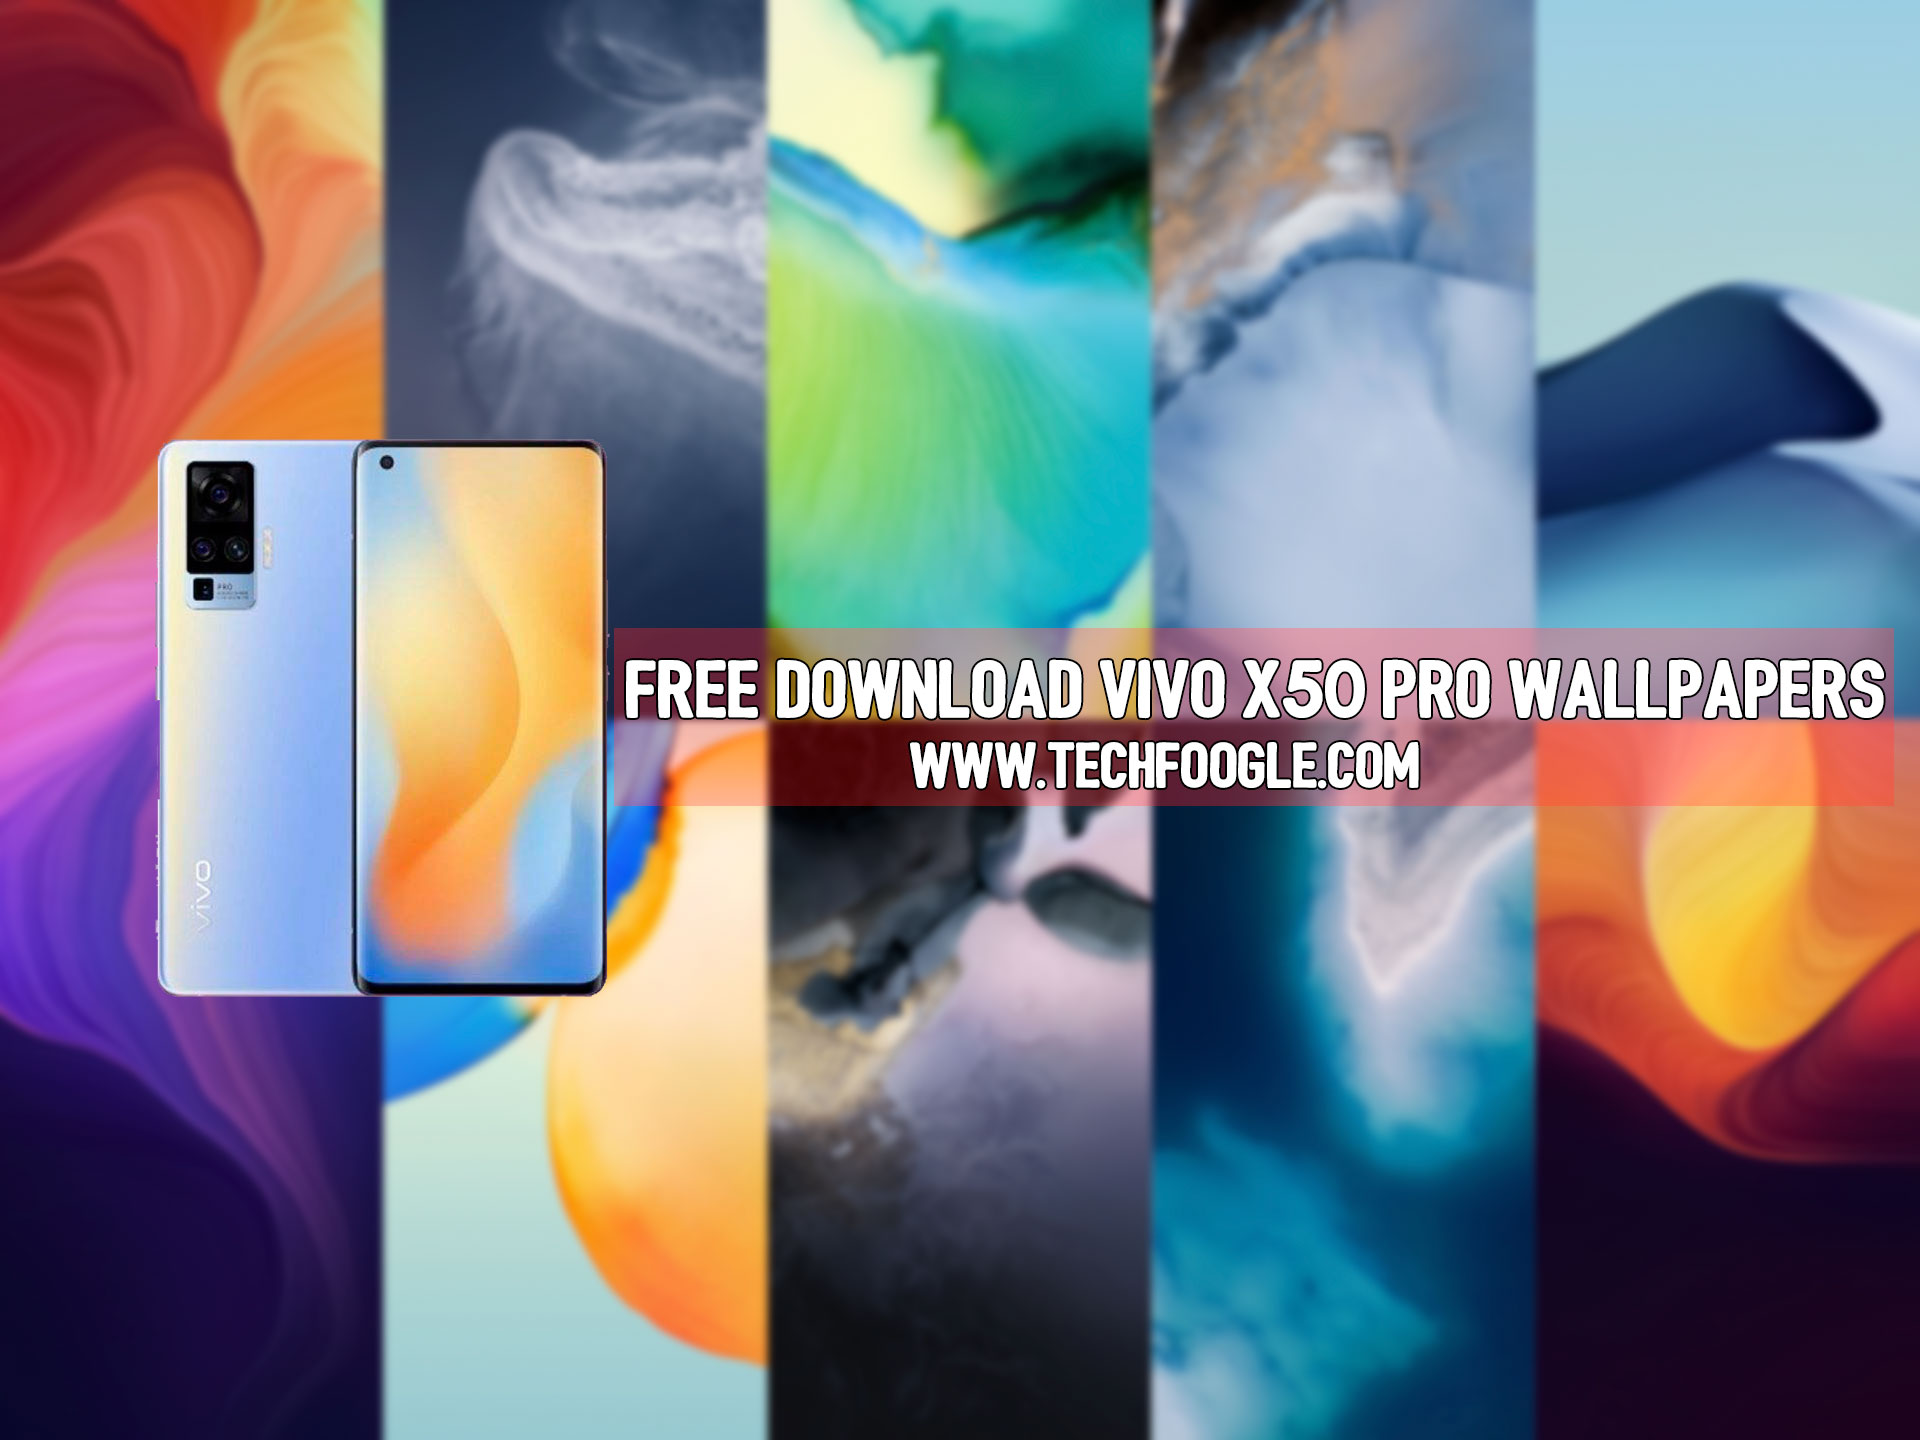 Free Download Vivo X50 Pro Wallpapers [4K] - TechFoogle